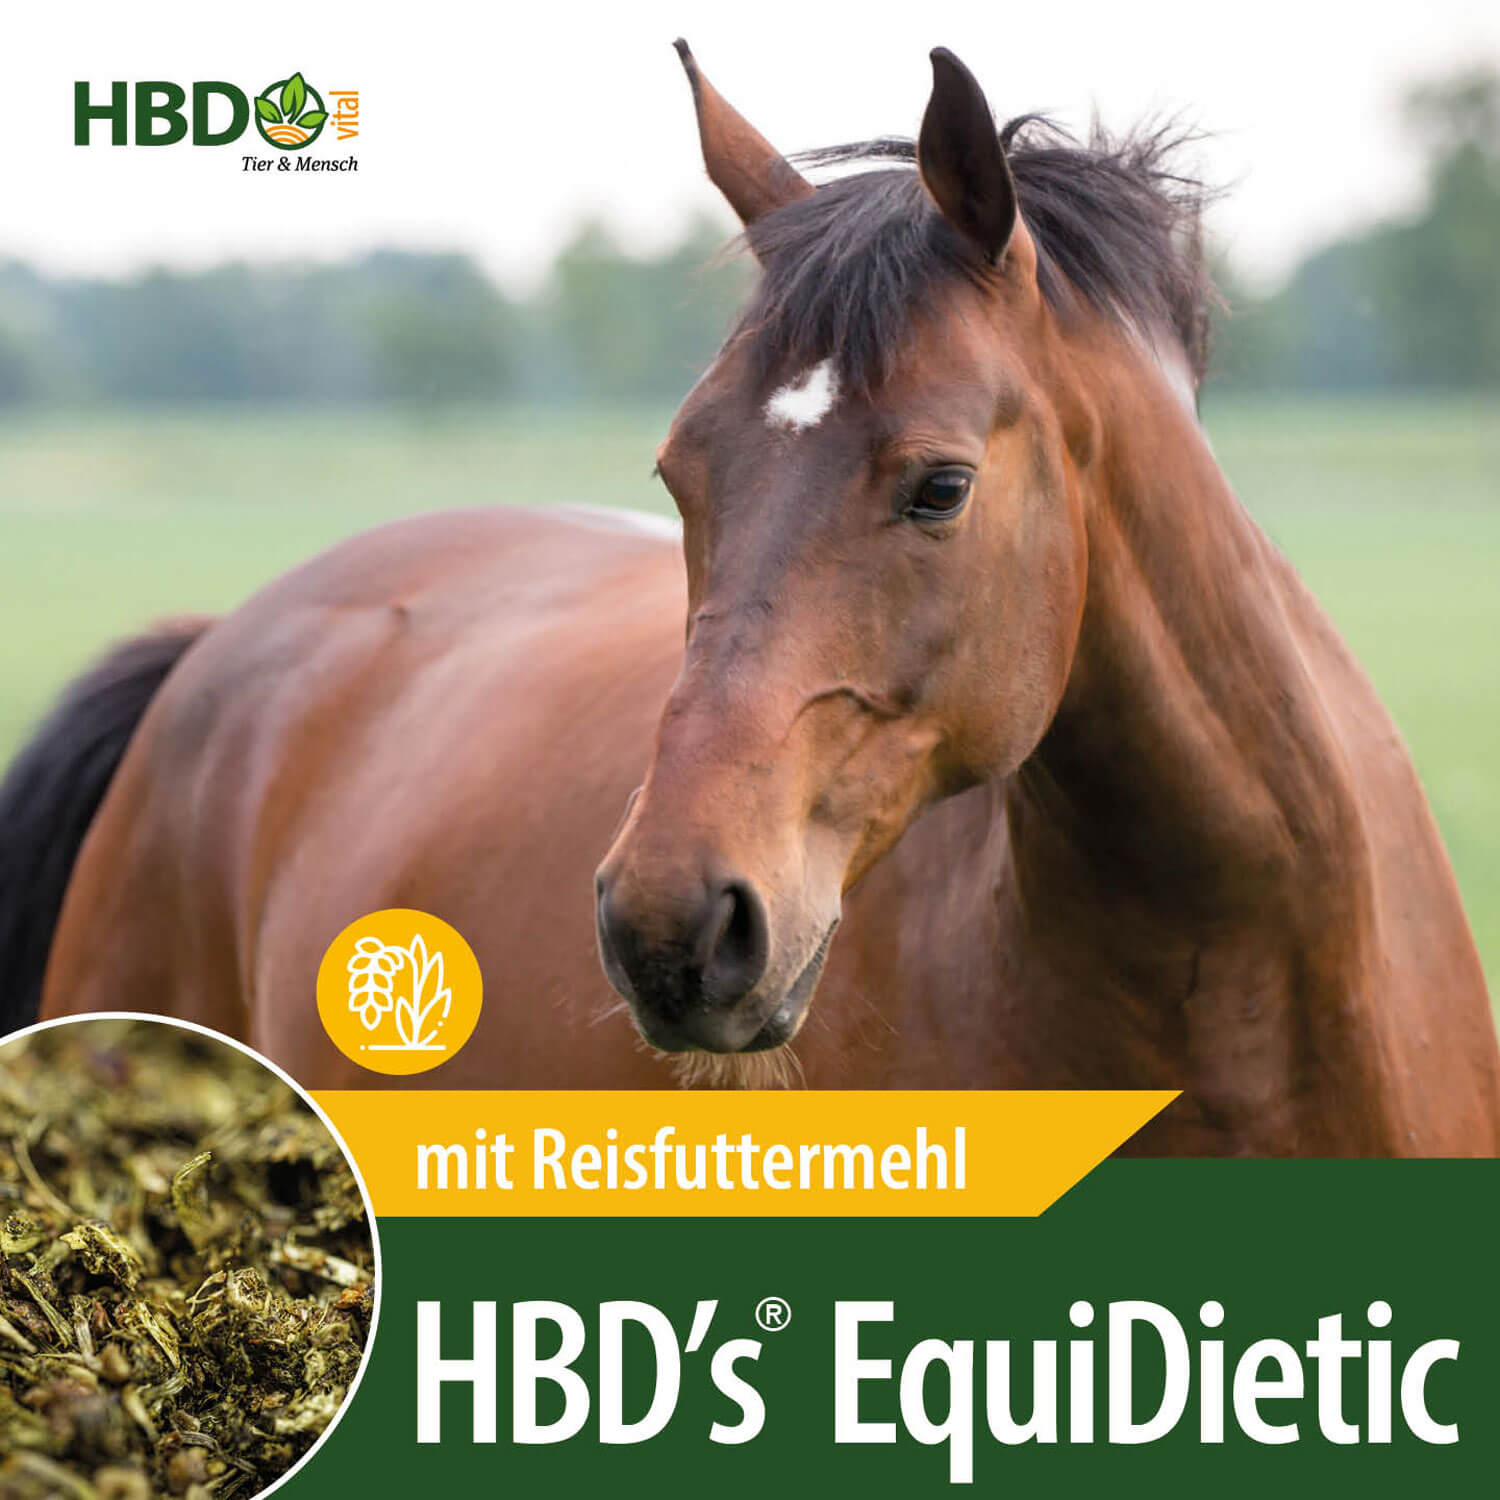 HBD-Agrar - HBD's® EquiDietic - mit Reisfuttermehl